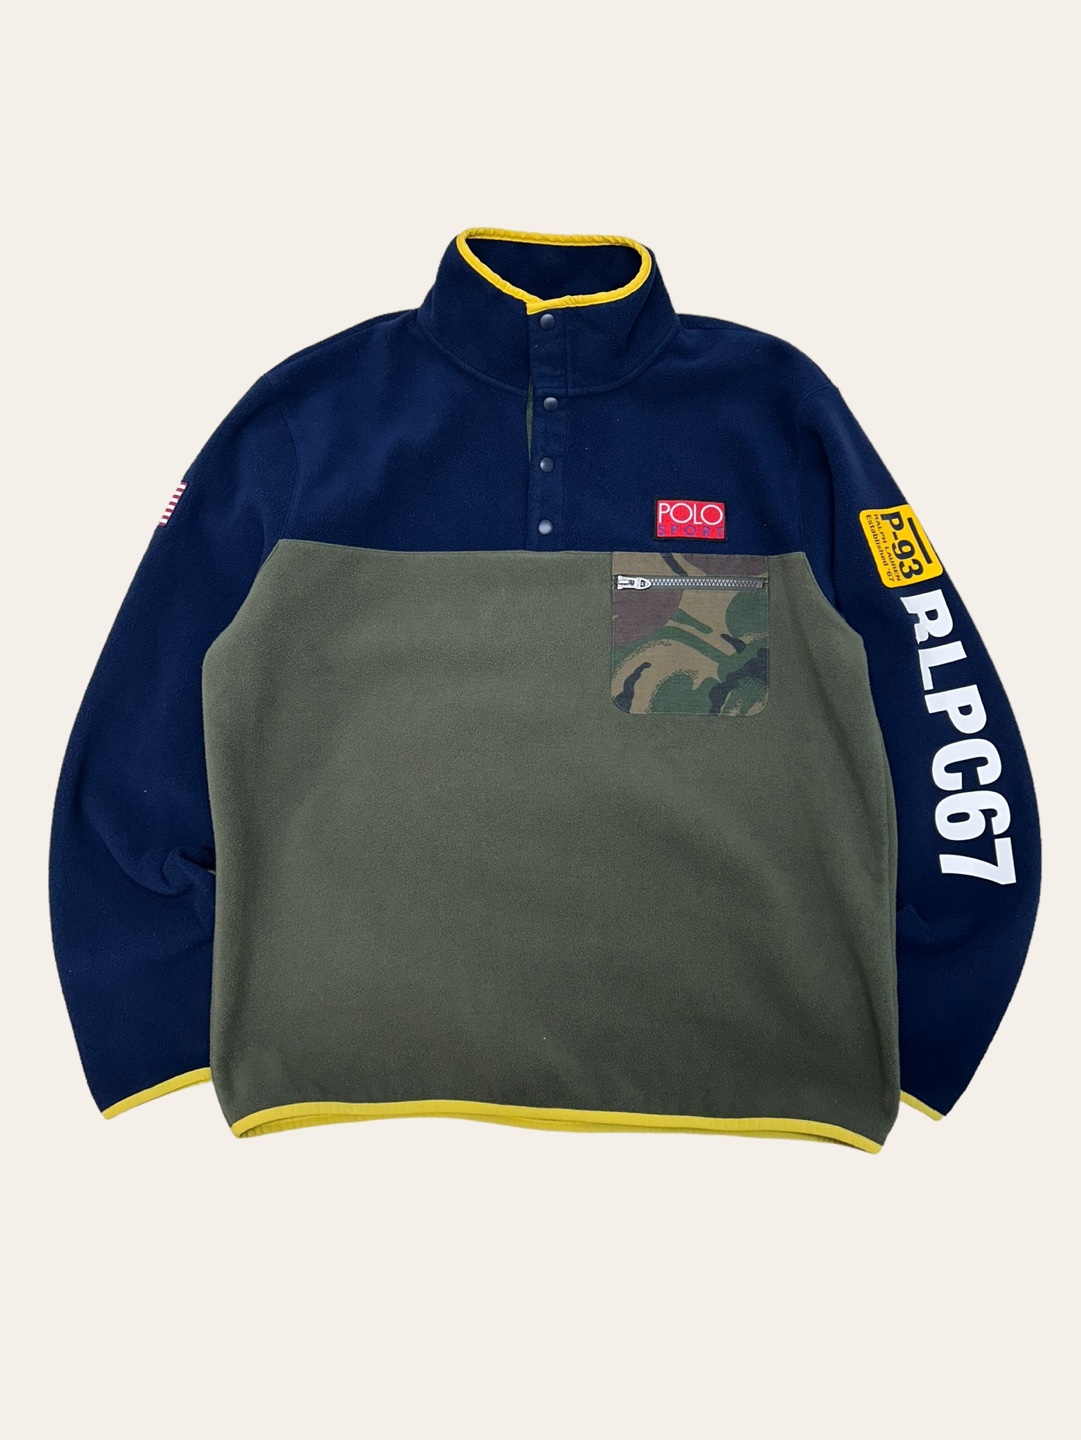 Polo ralph lauren navy/khaki HI TECH RL-67 fleece pullover L